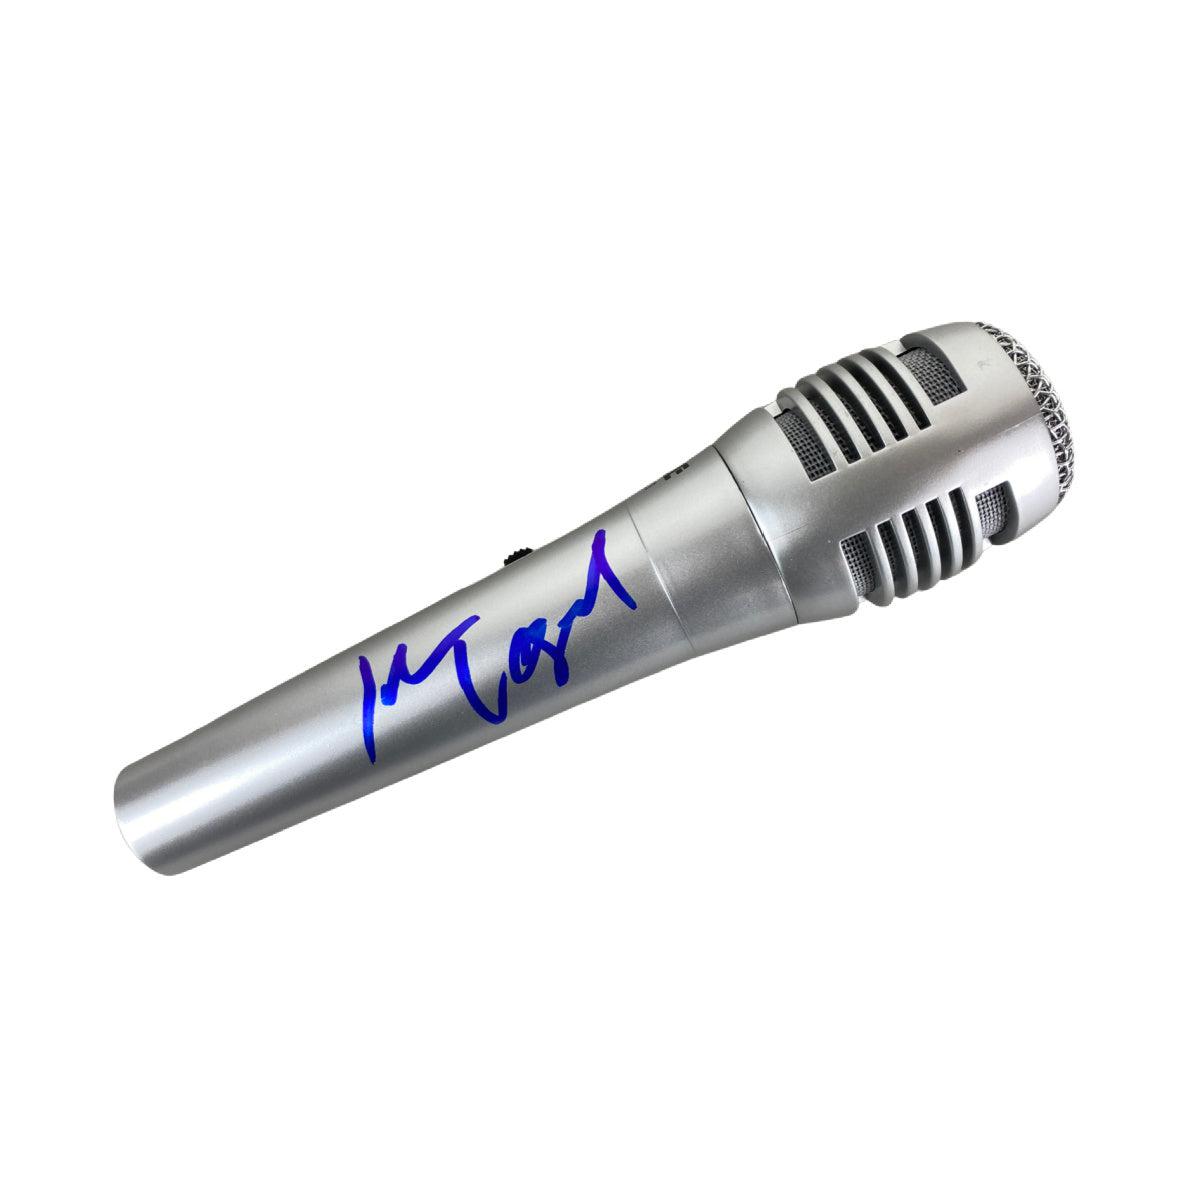 John Legend Signed Microphone Autographed ACOA